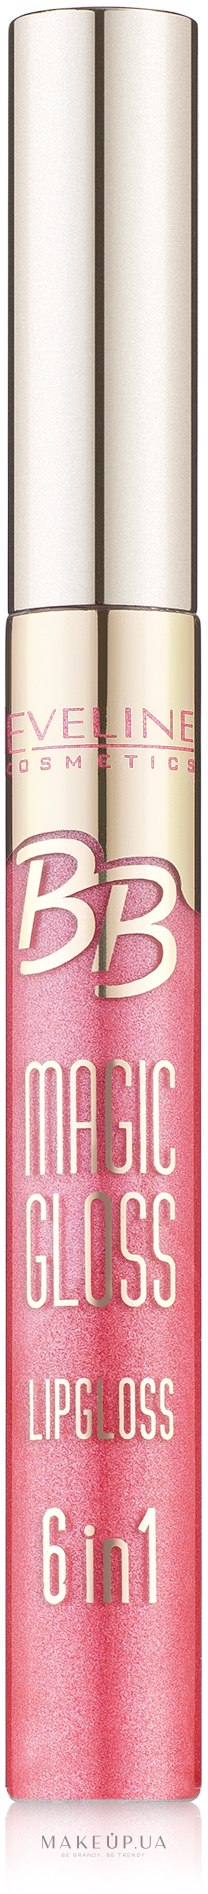 Eveline Cosmetics BB Magic Gloss Lipgloss 6 w 1